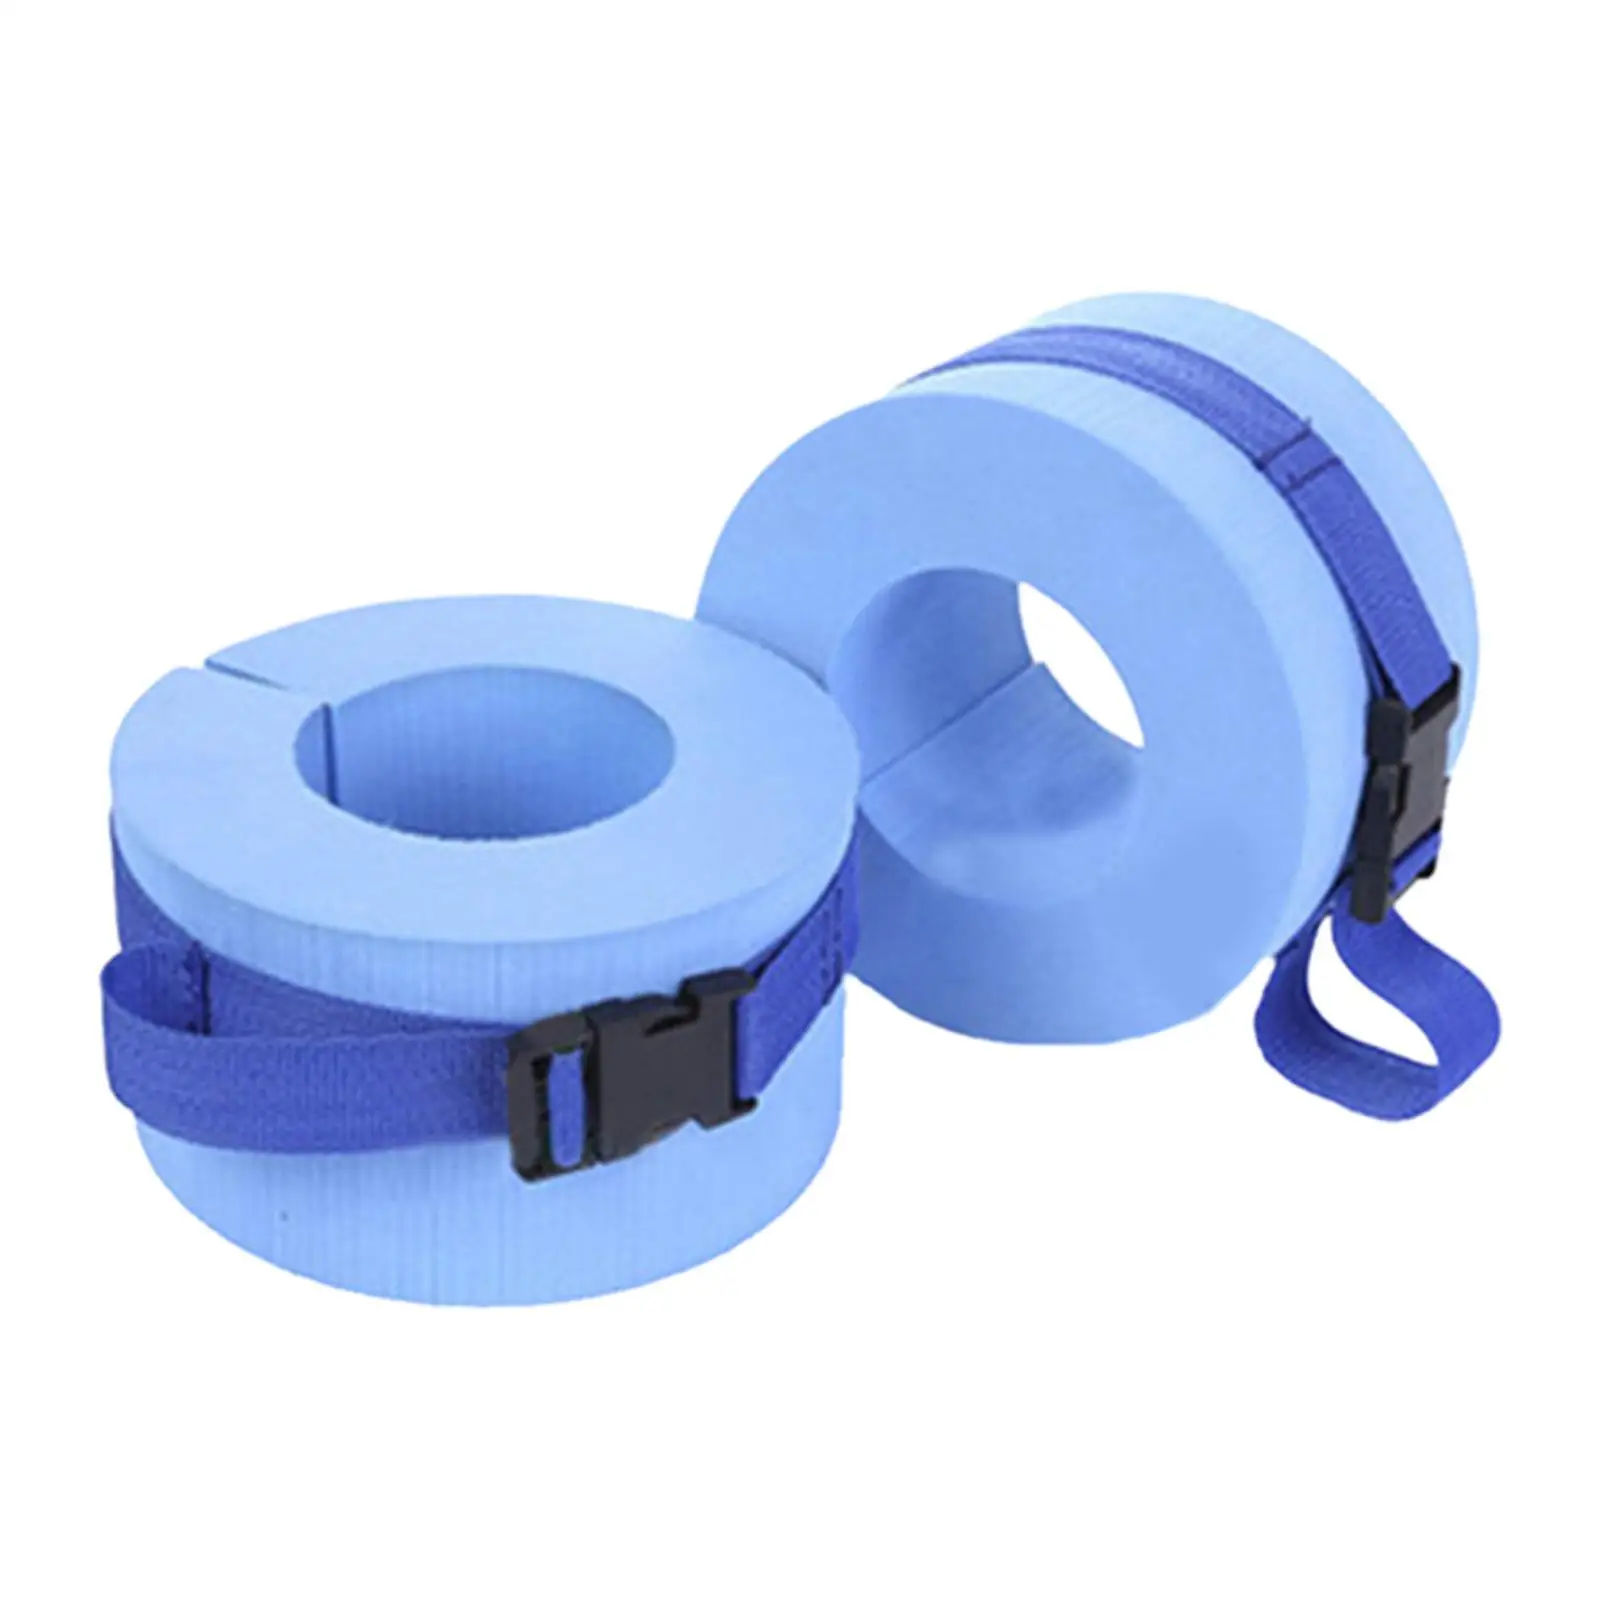 2x Swim Aquatic Cuffs Floaties Device Waterproof Pool Exercise Training Aid Swim